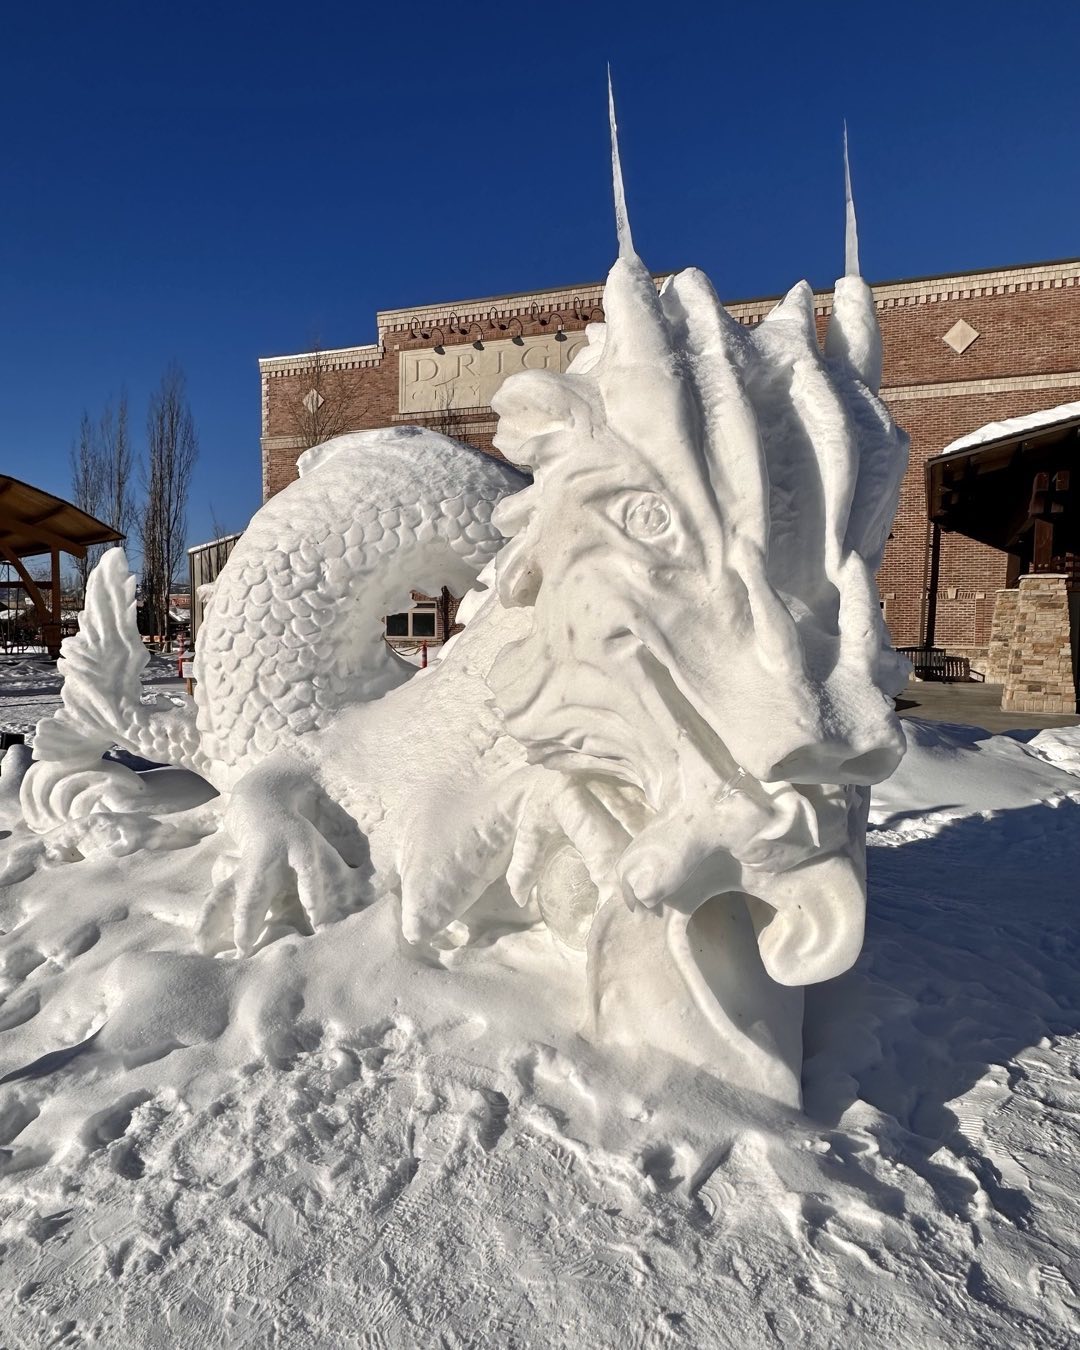 Intricate snow sculptures celebrate winter in downtown Driggs, Idaho. #snowsculptures #driggsidaho #tetonvalleyidaho #bestofthegemstate #communityspirit #orcuttphotography.com #winterinidaho